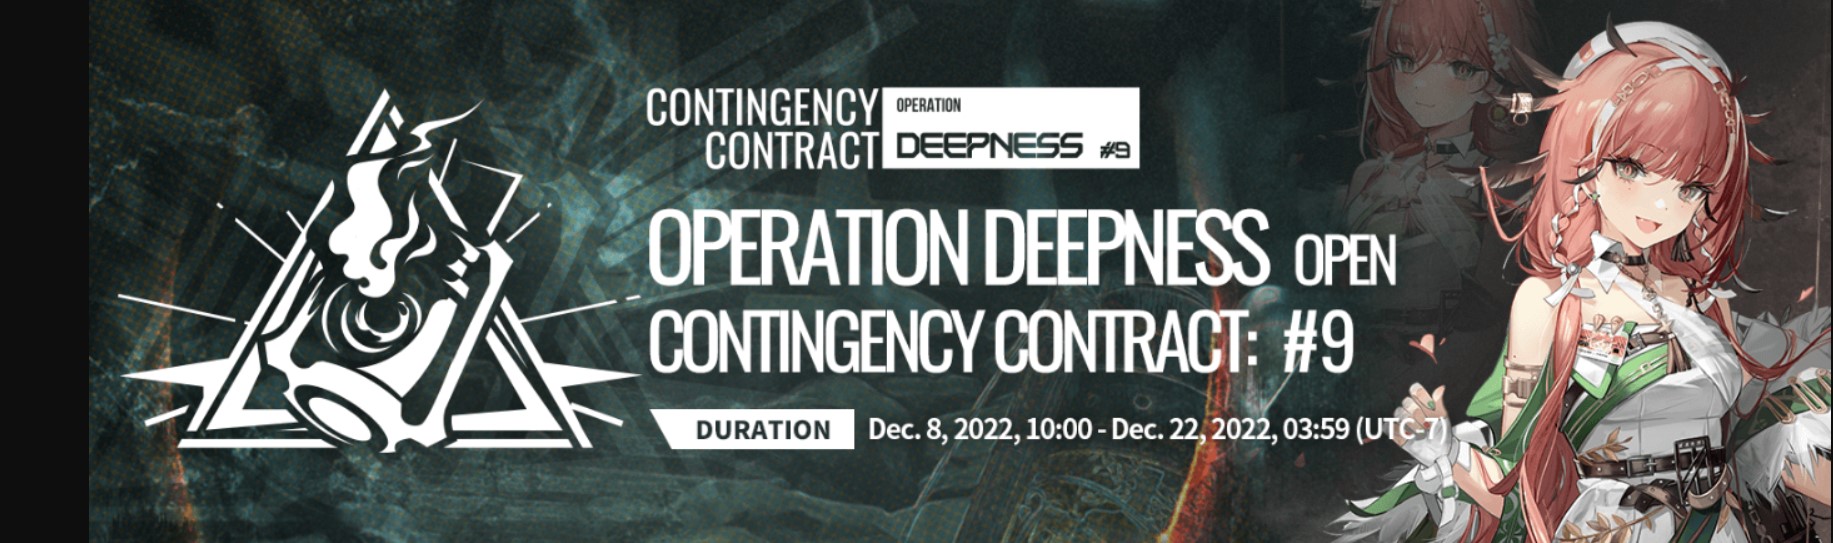 Arknights – Contingency Contract #9 Features Exusiai, Skadi, Mountain, and Kal’tsit Operators